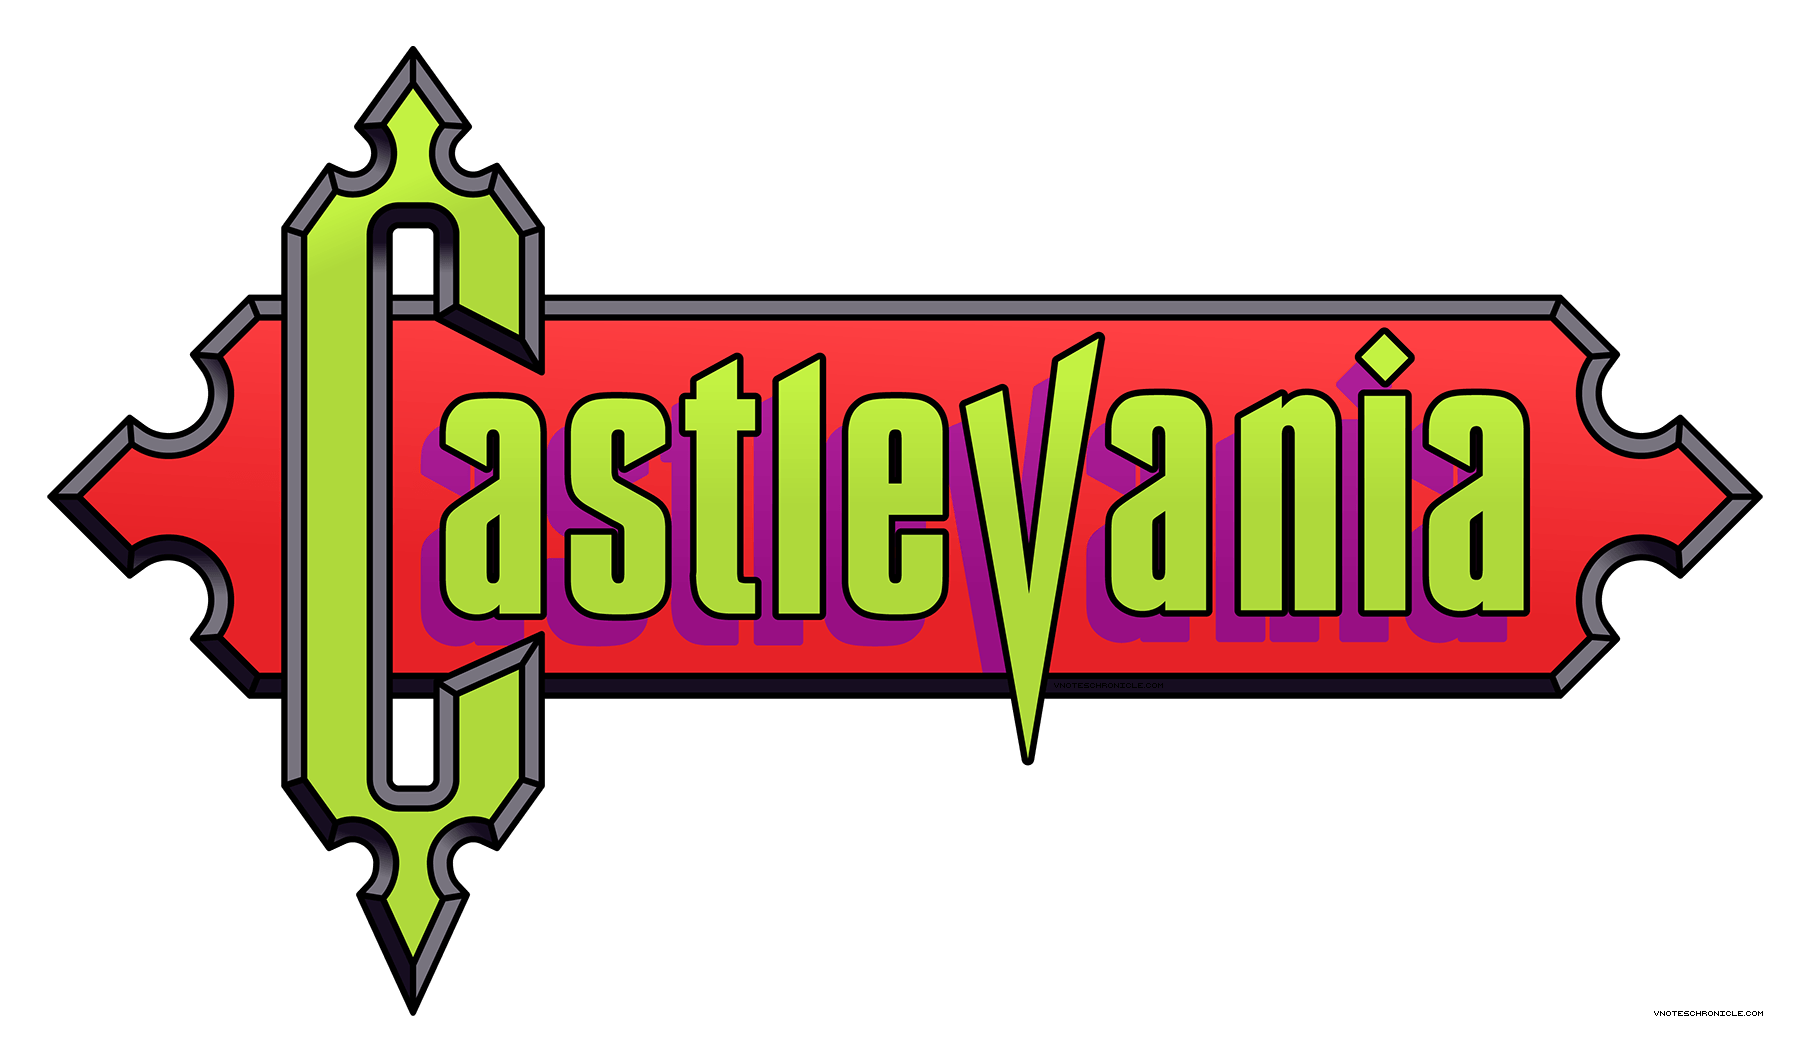 Castlevania Logo - Castlevania | Logopedia | FANDOM powered by Wikia